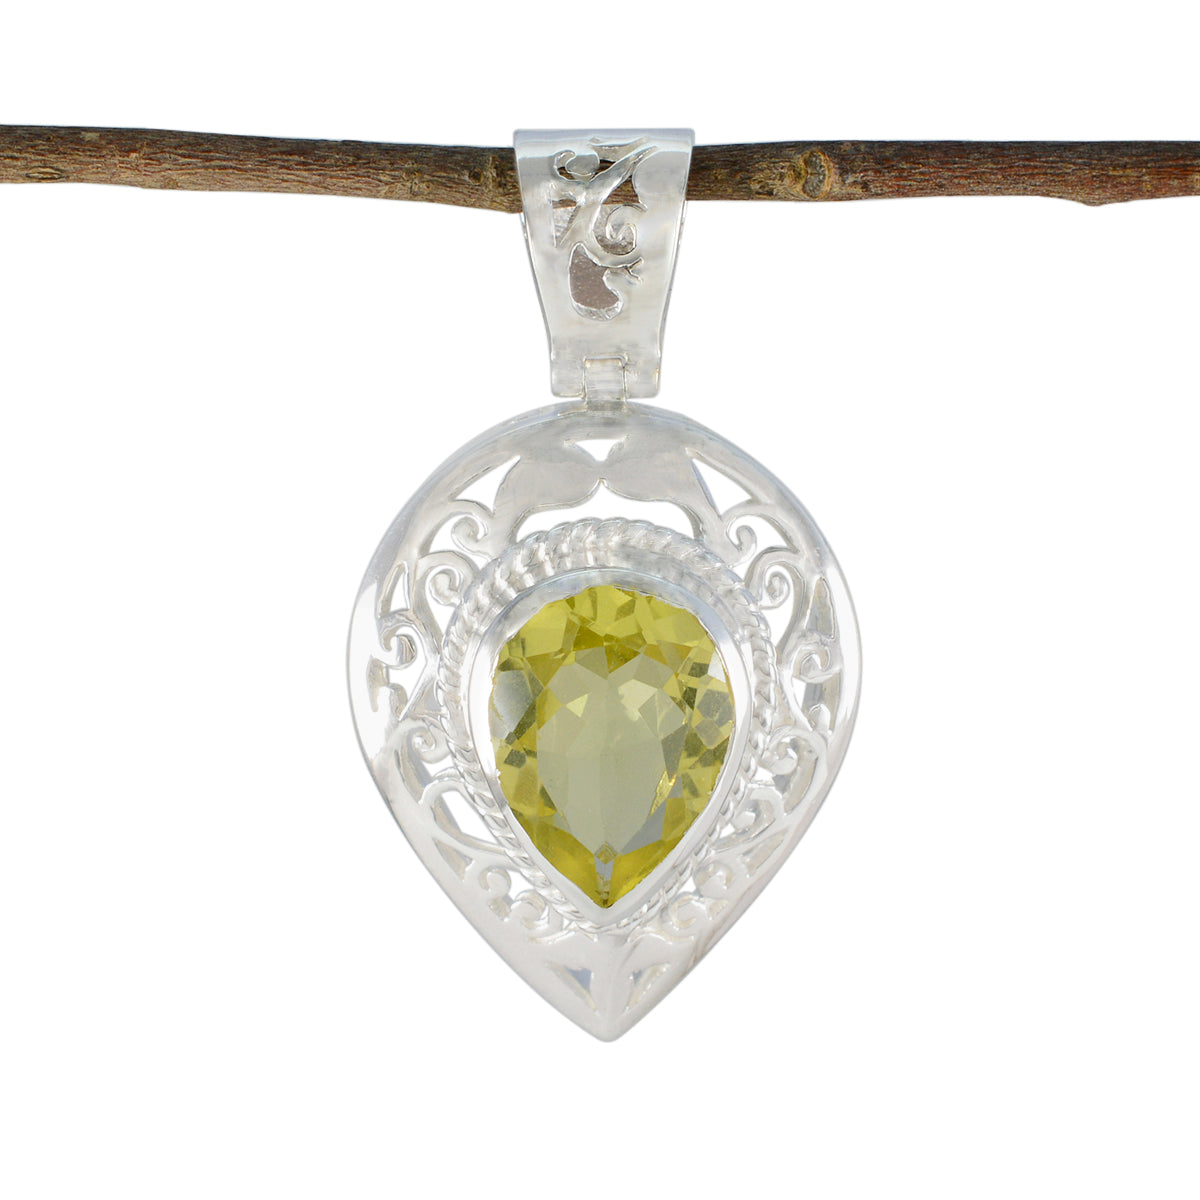 Riyo Glamorous Gemstone Pear Faceted Yellow Lemon Quartz Sterling Silver Pendant Gift For Friend